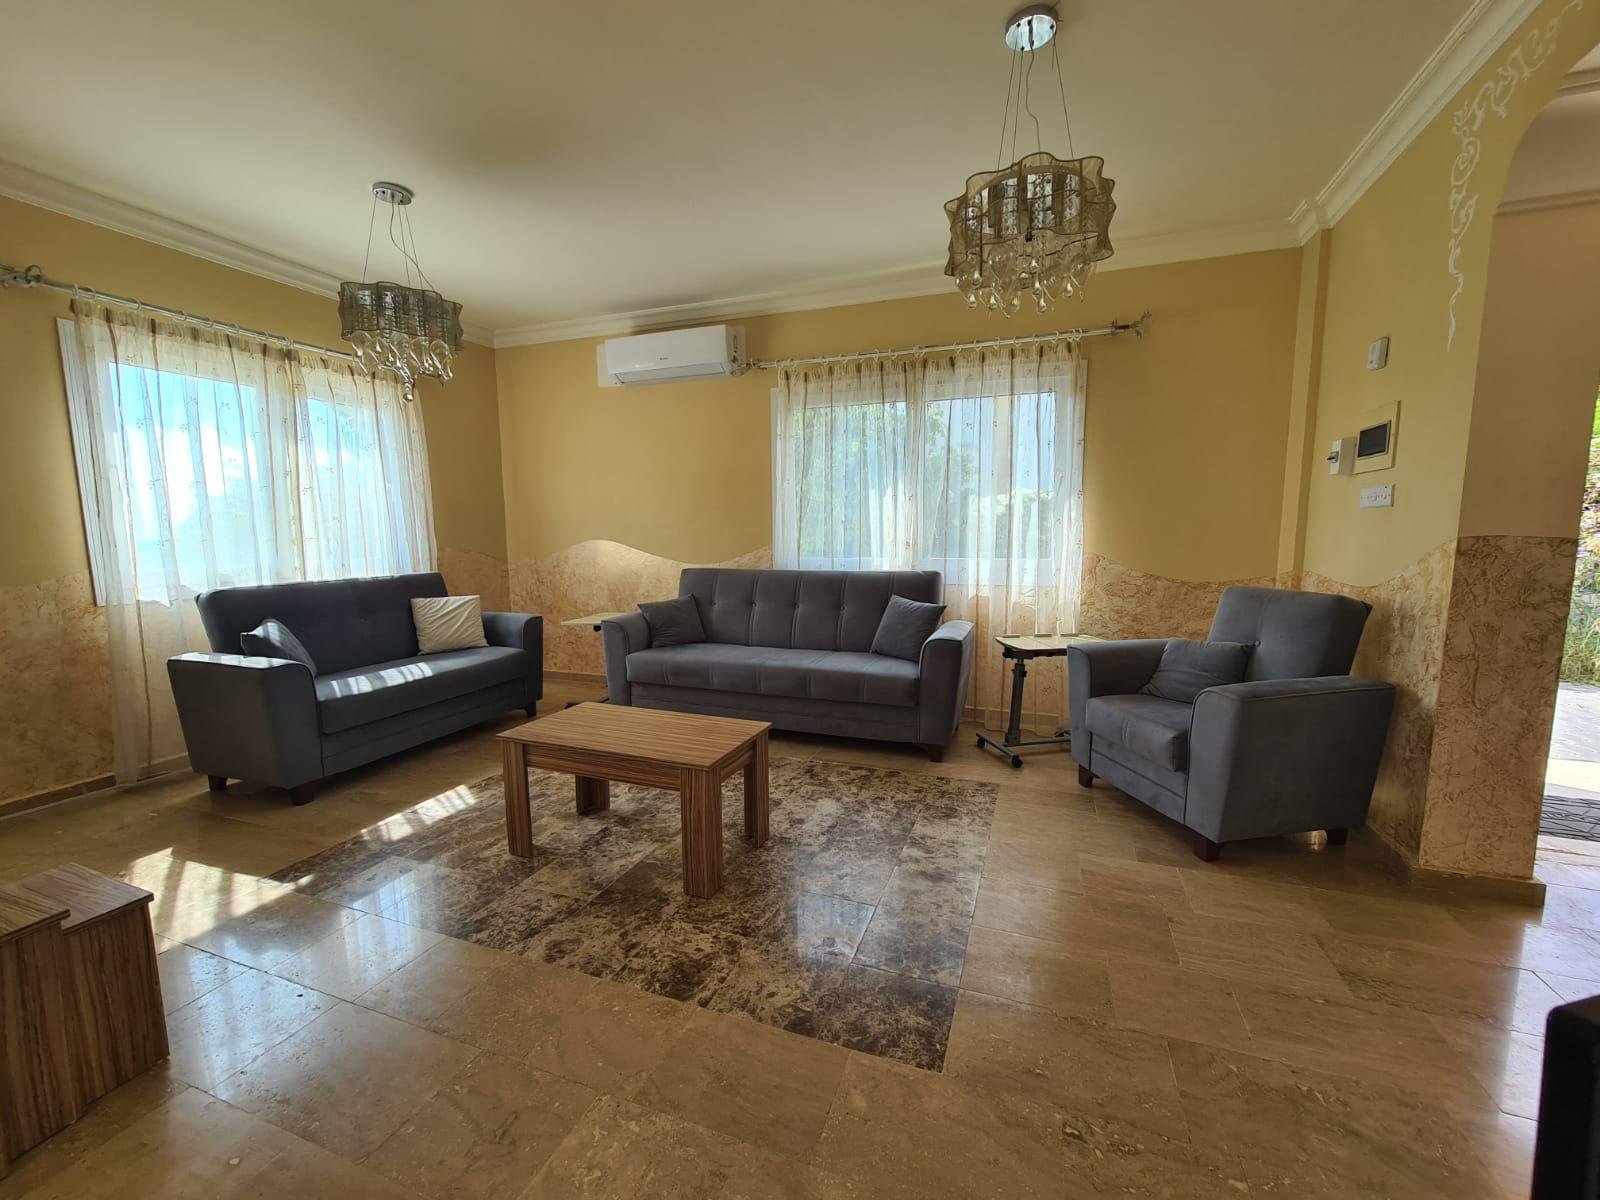 3 bedroom villa for sale in Kyrenia, Karshiyaka-227b286a-1d01-49b5-9fc1-c3e0aa584b25